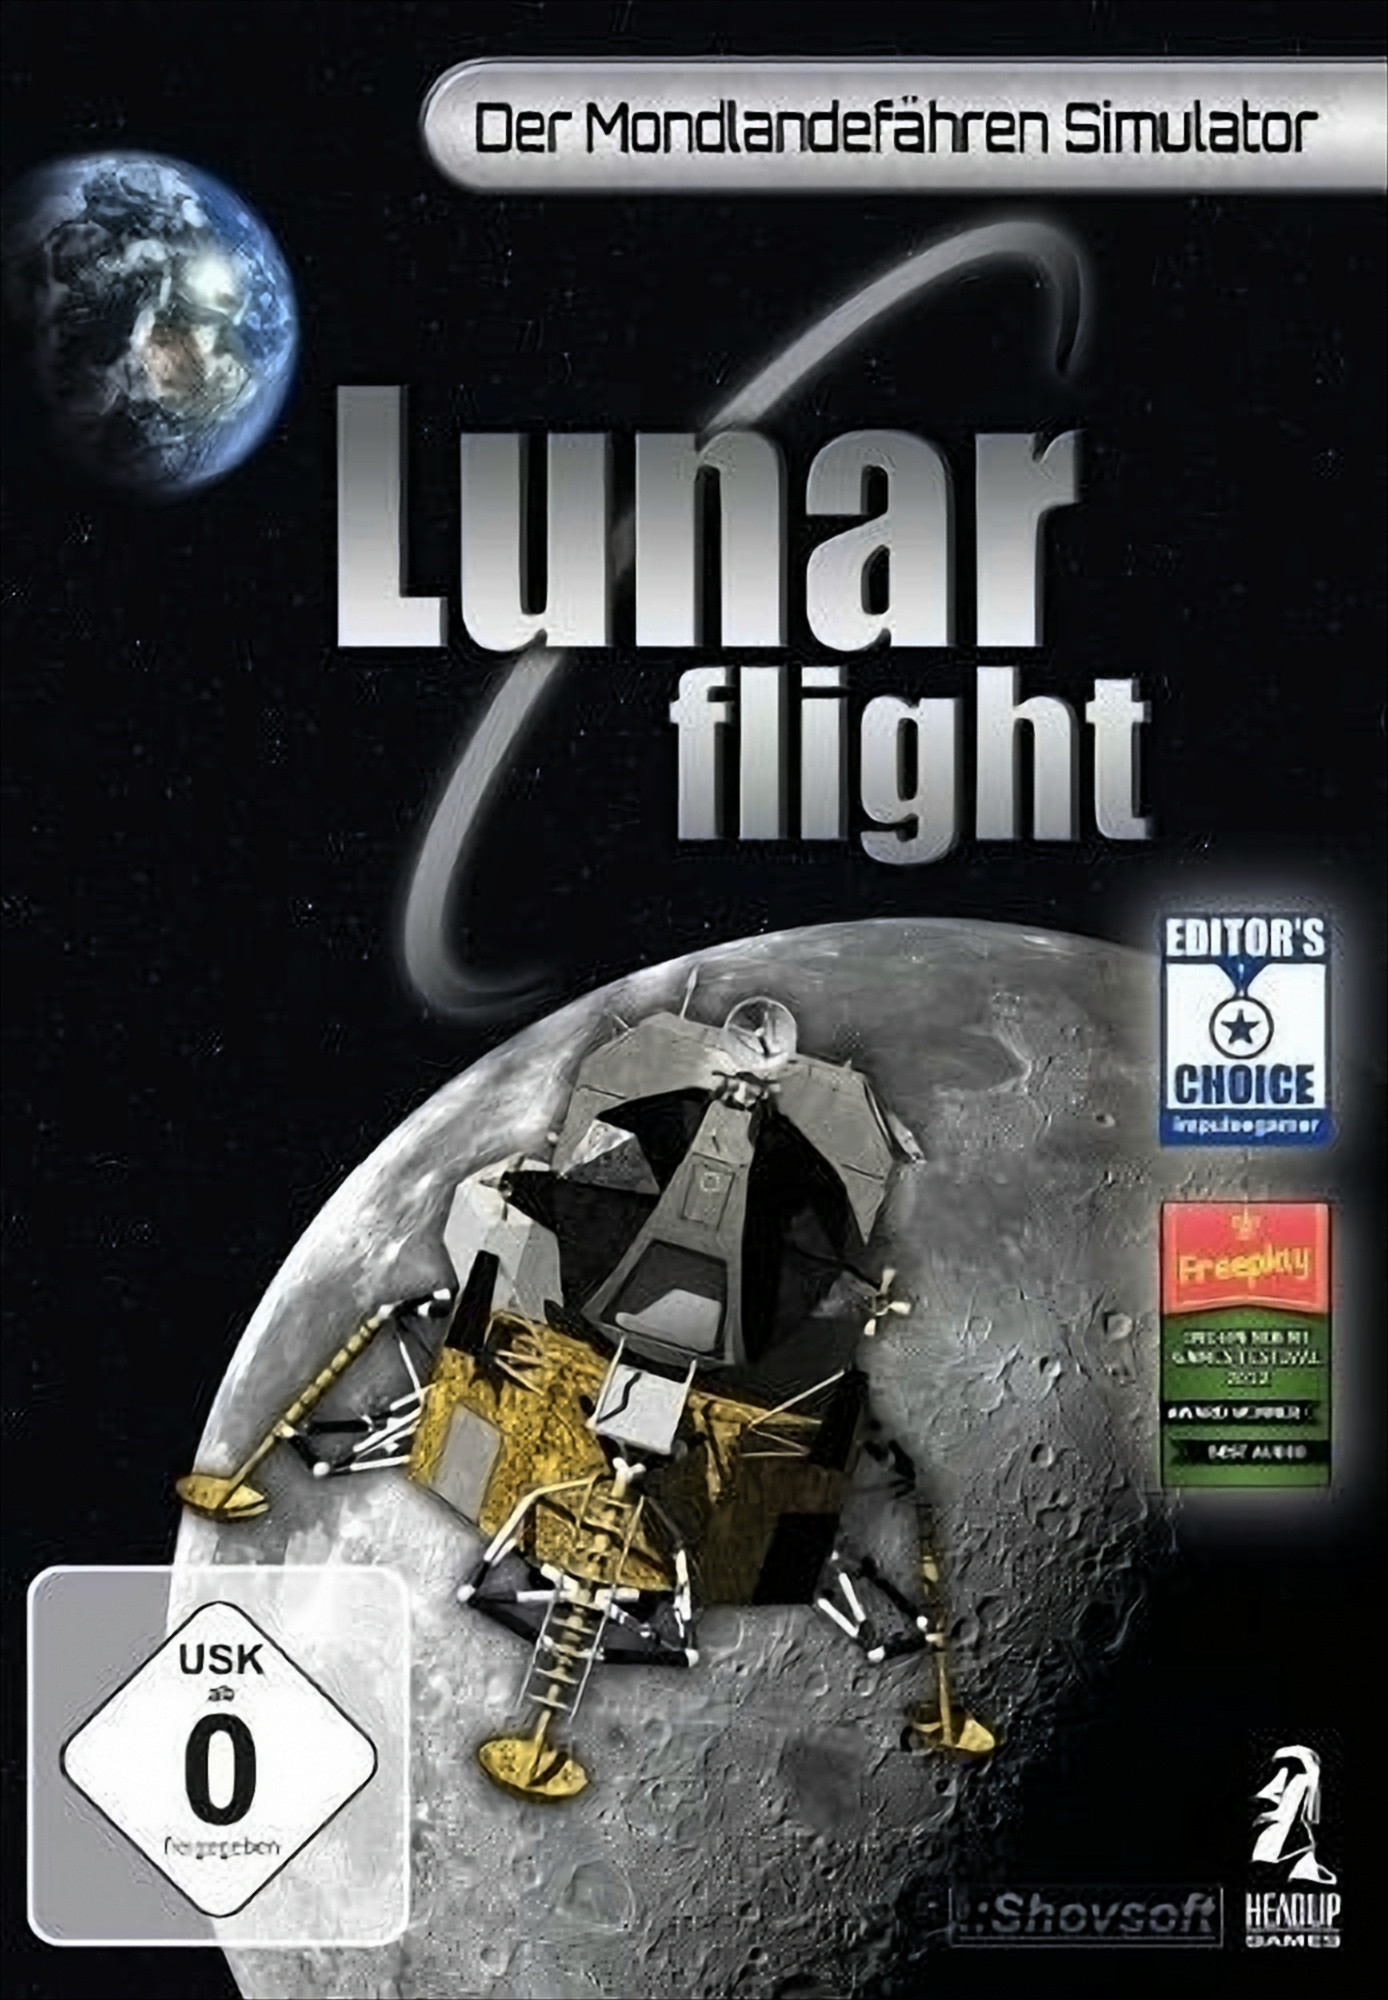 Simulator [PC] Mondlandefähren - Flight Lunar Der -